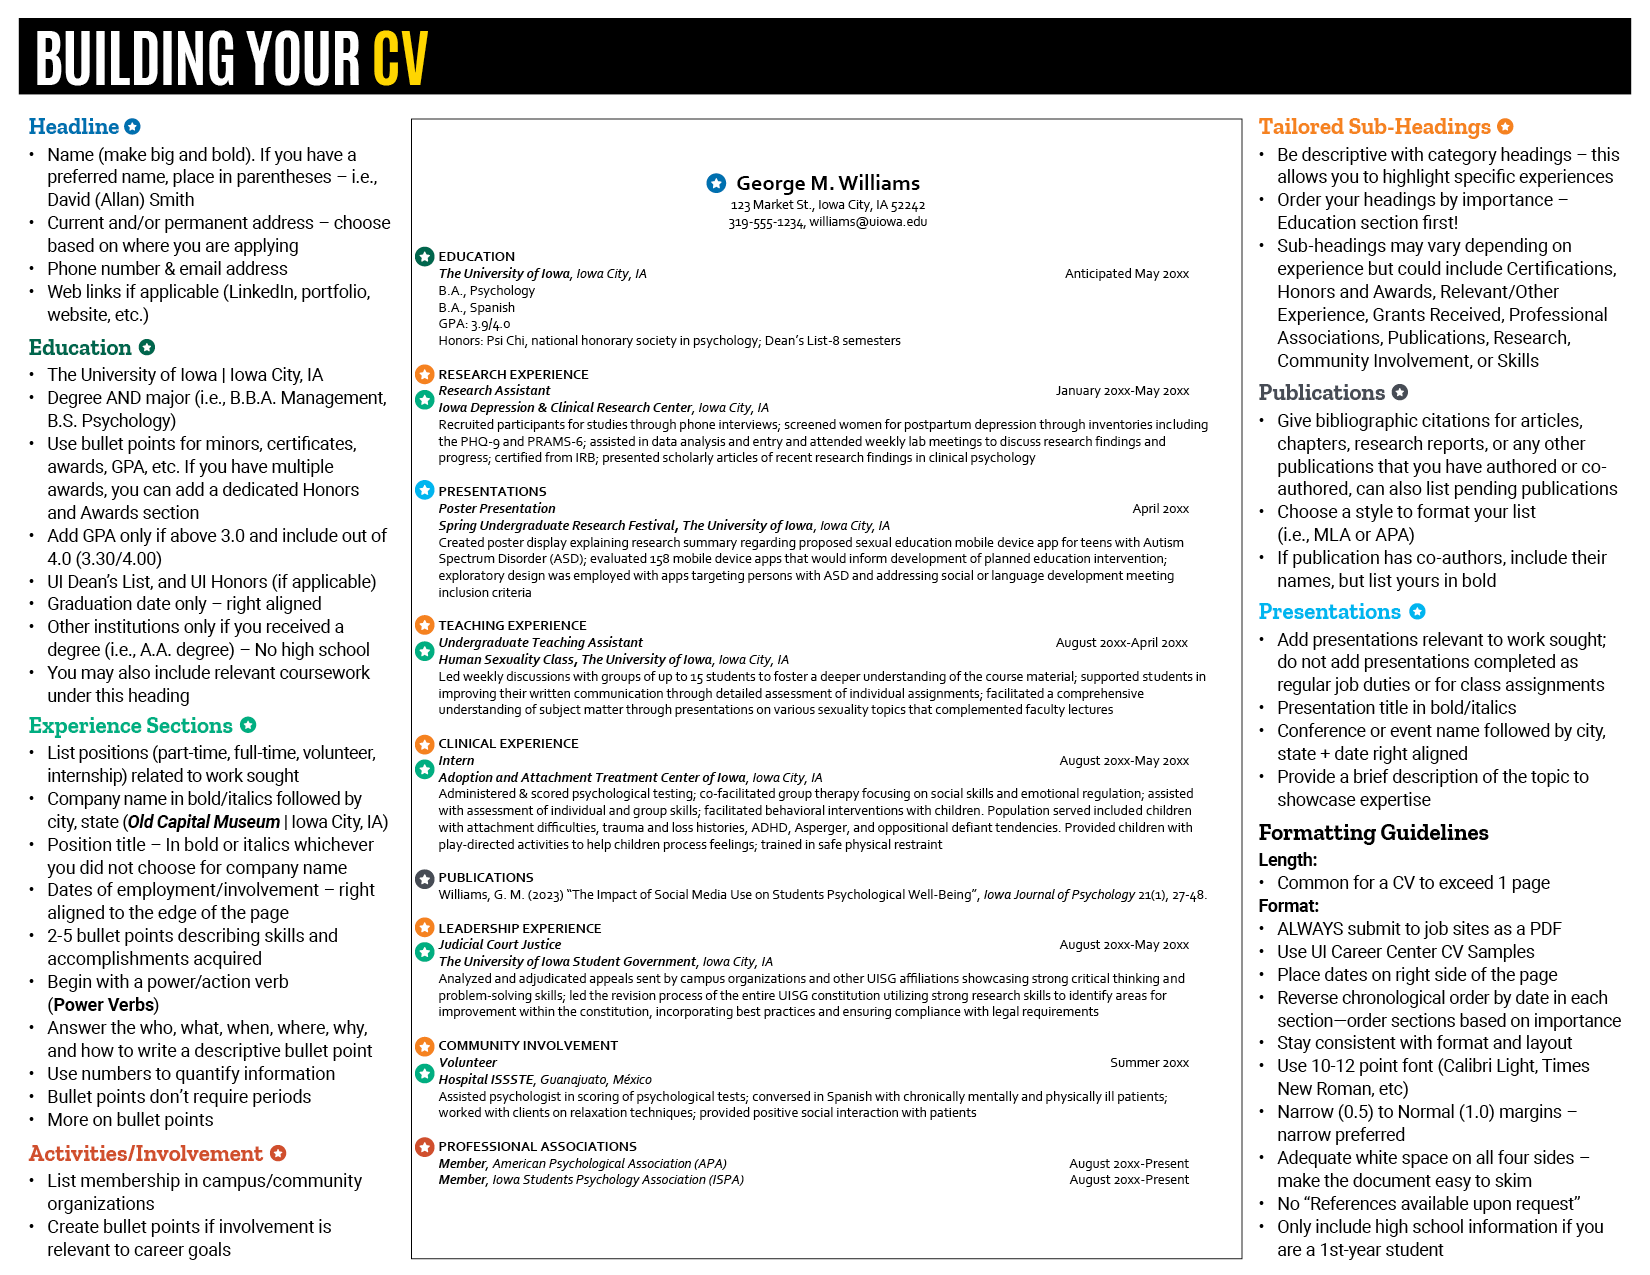 CV Guidelines